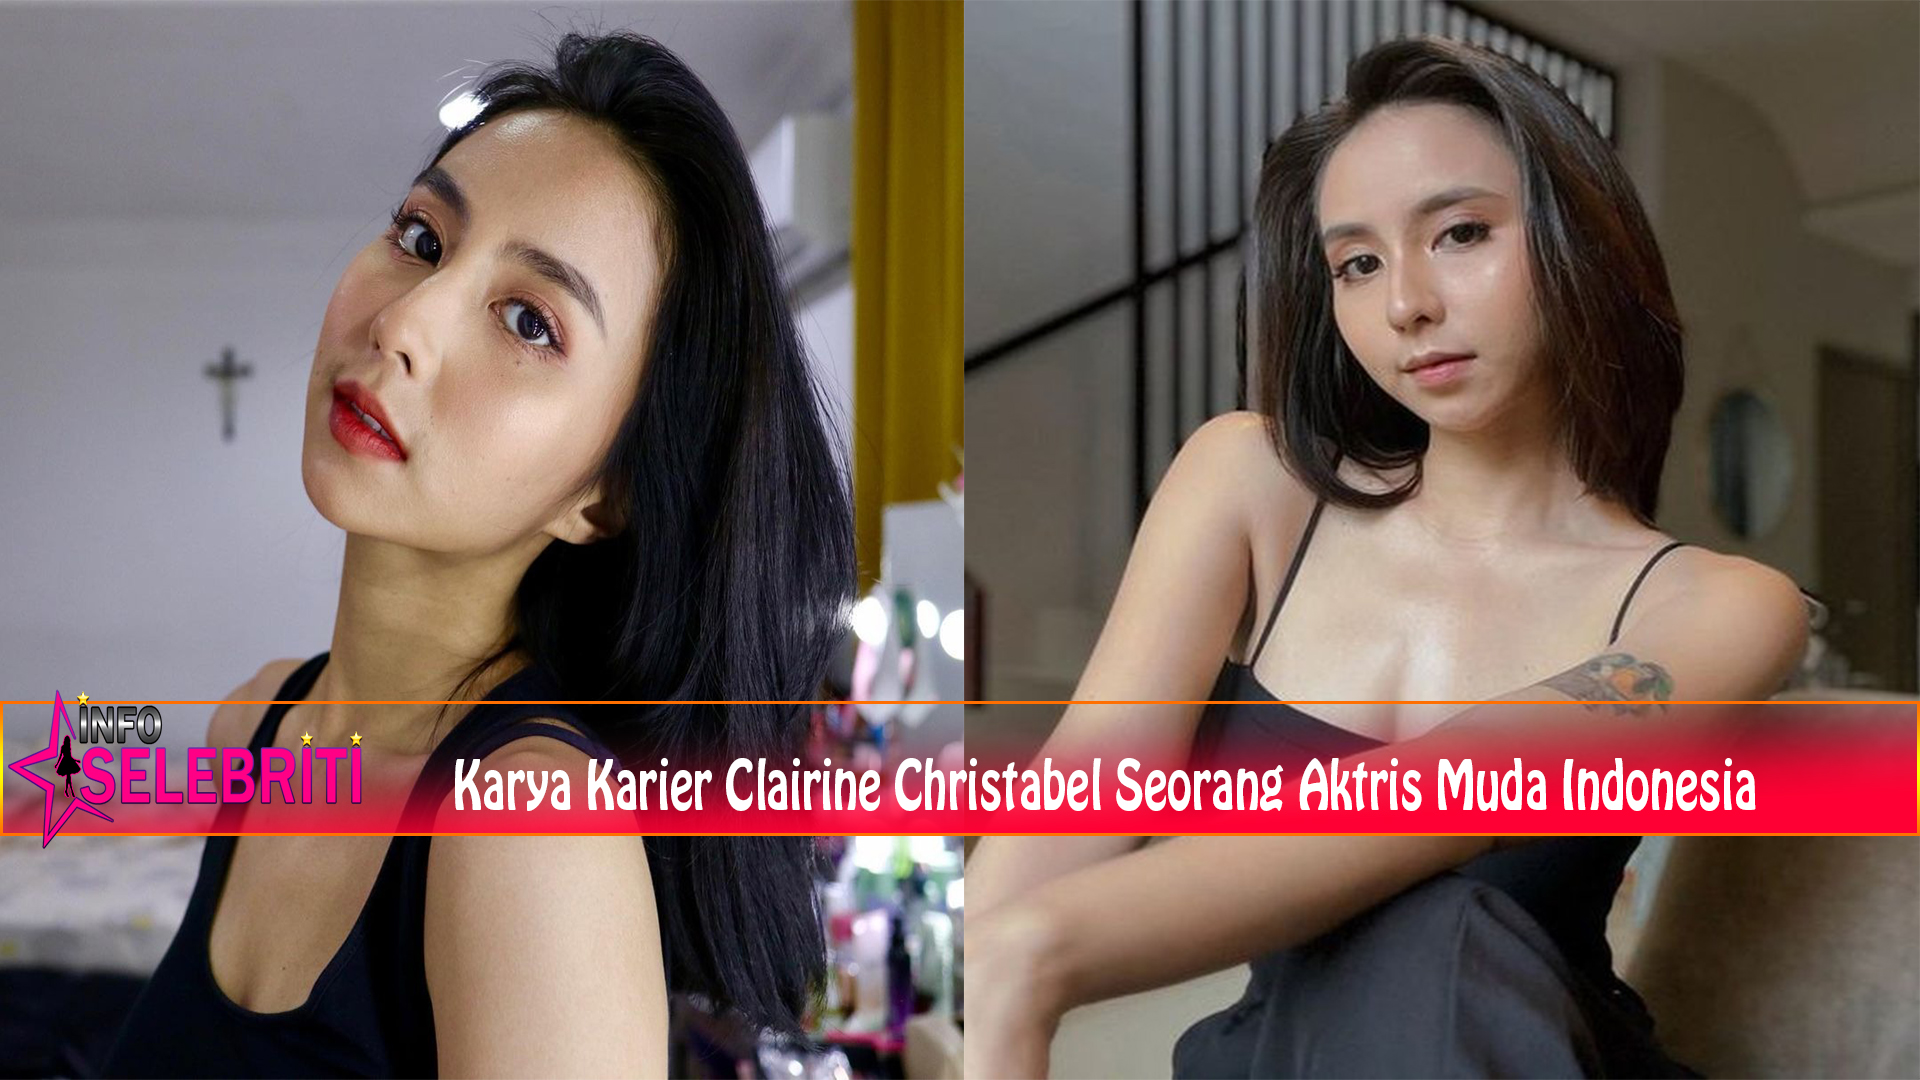 Karya Karier Clairine Christabel Seorang Aktris Muda Indonesia